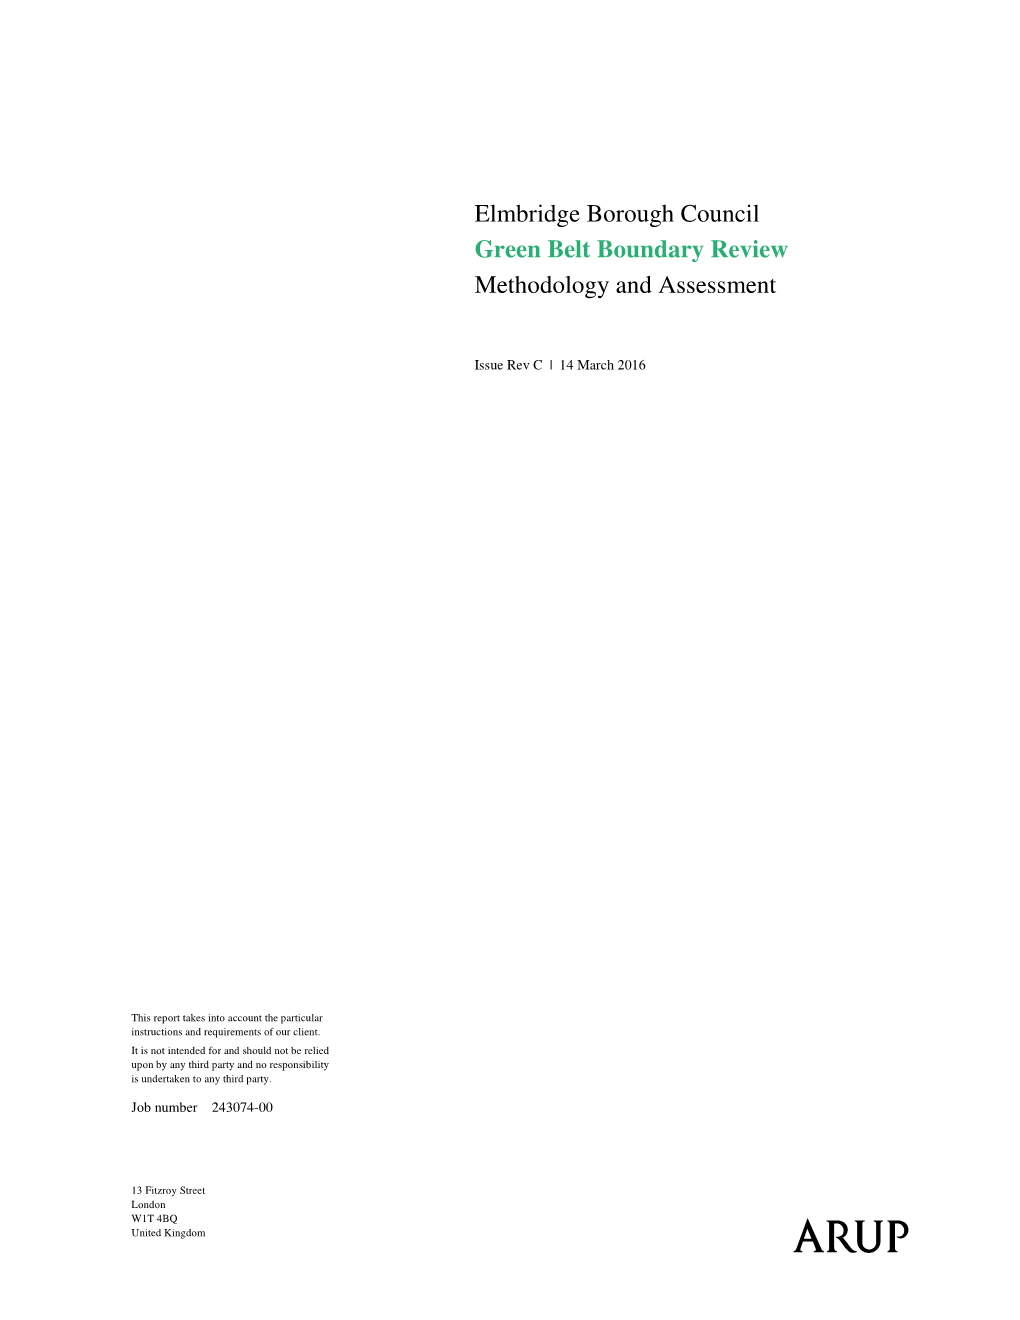 Green Belt Boundary Review Methodology and Assessment